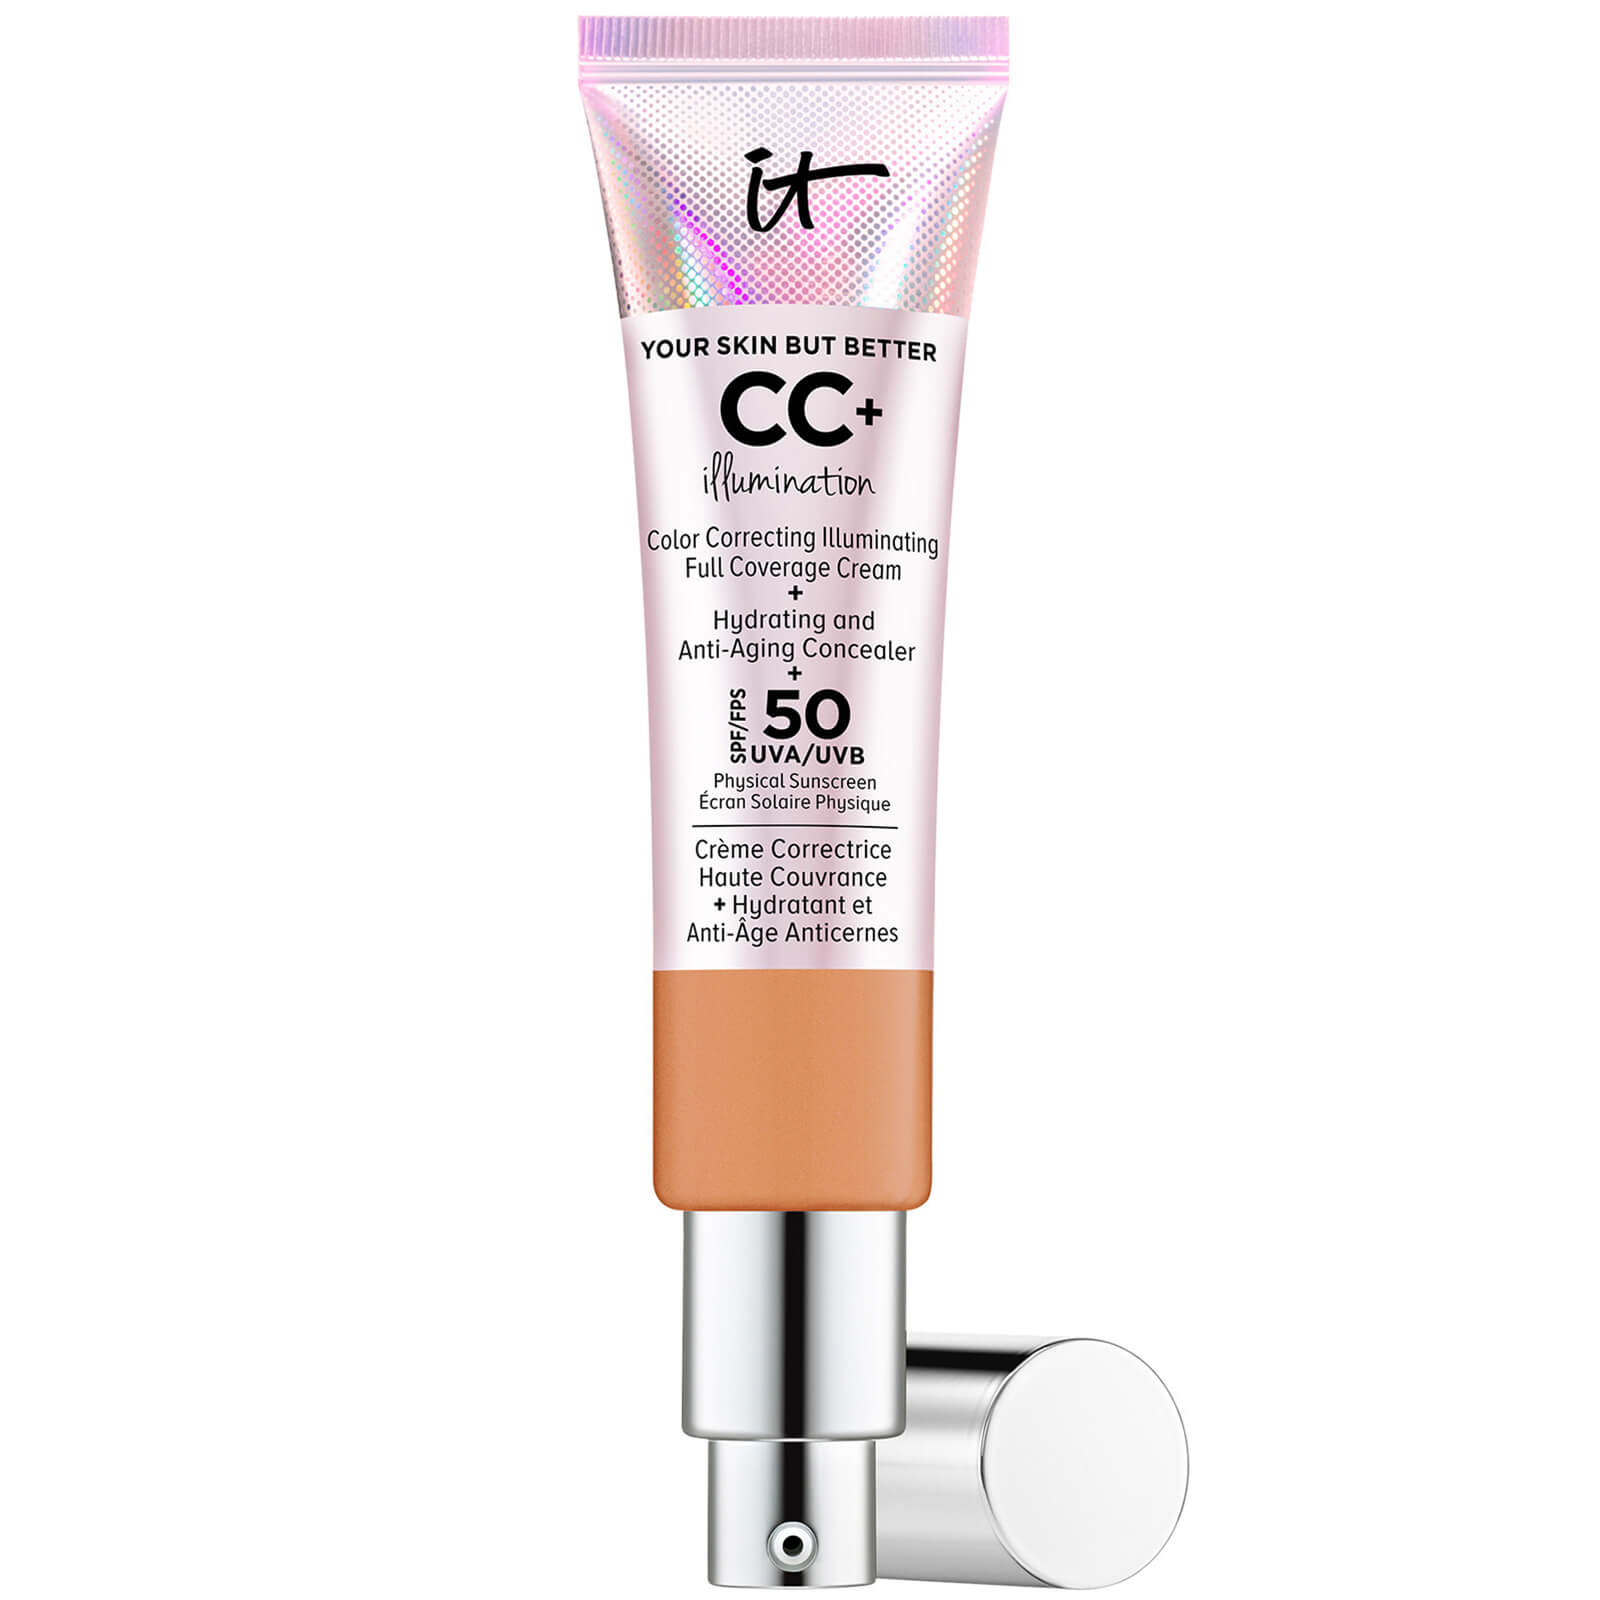 IT Cosmetics Your Skin But Better CC+ Illumination SPF50 32ml (Various Shades) - Tan